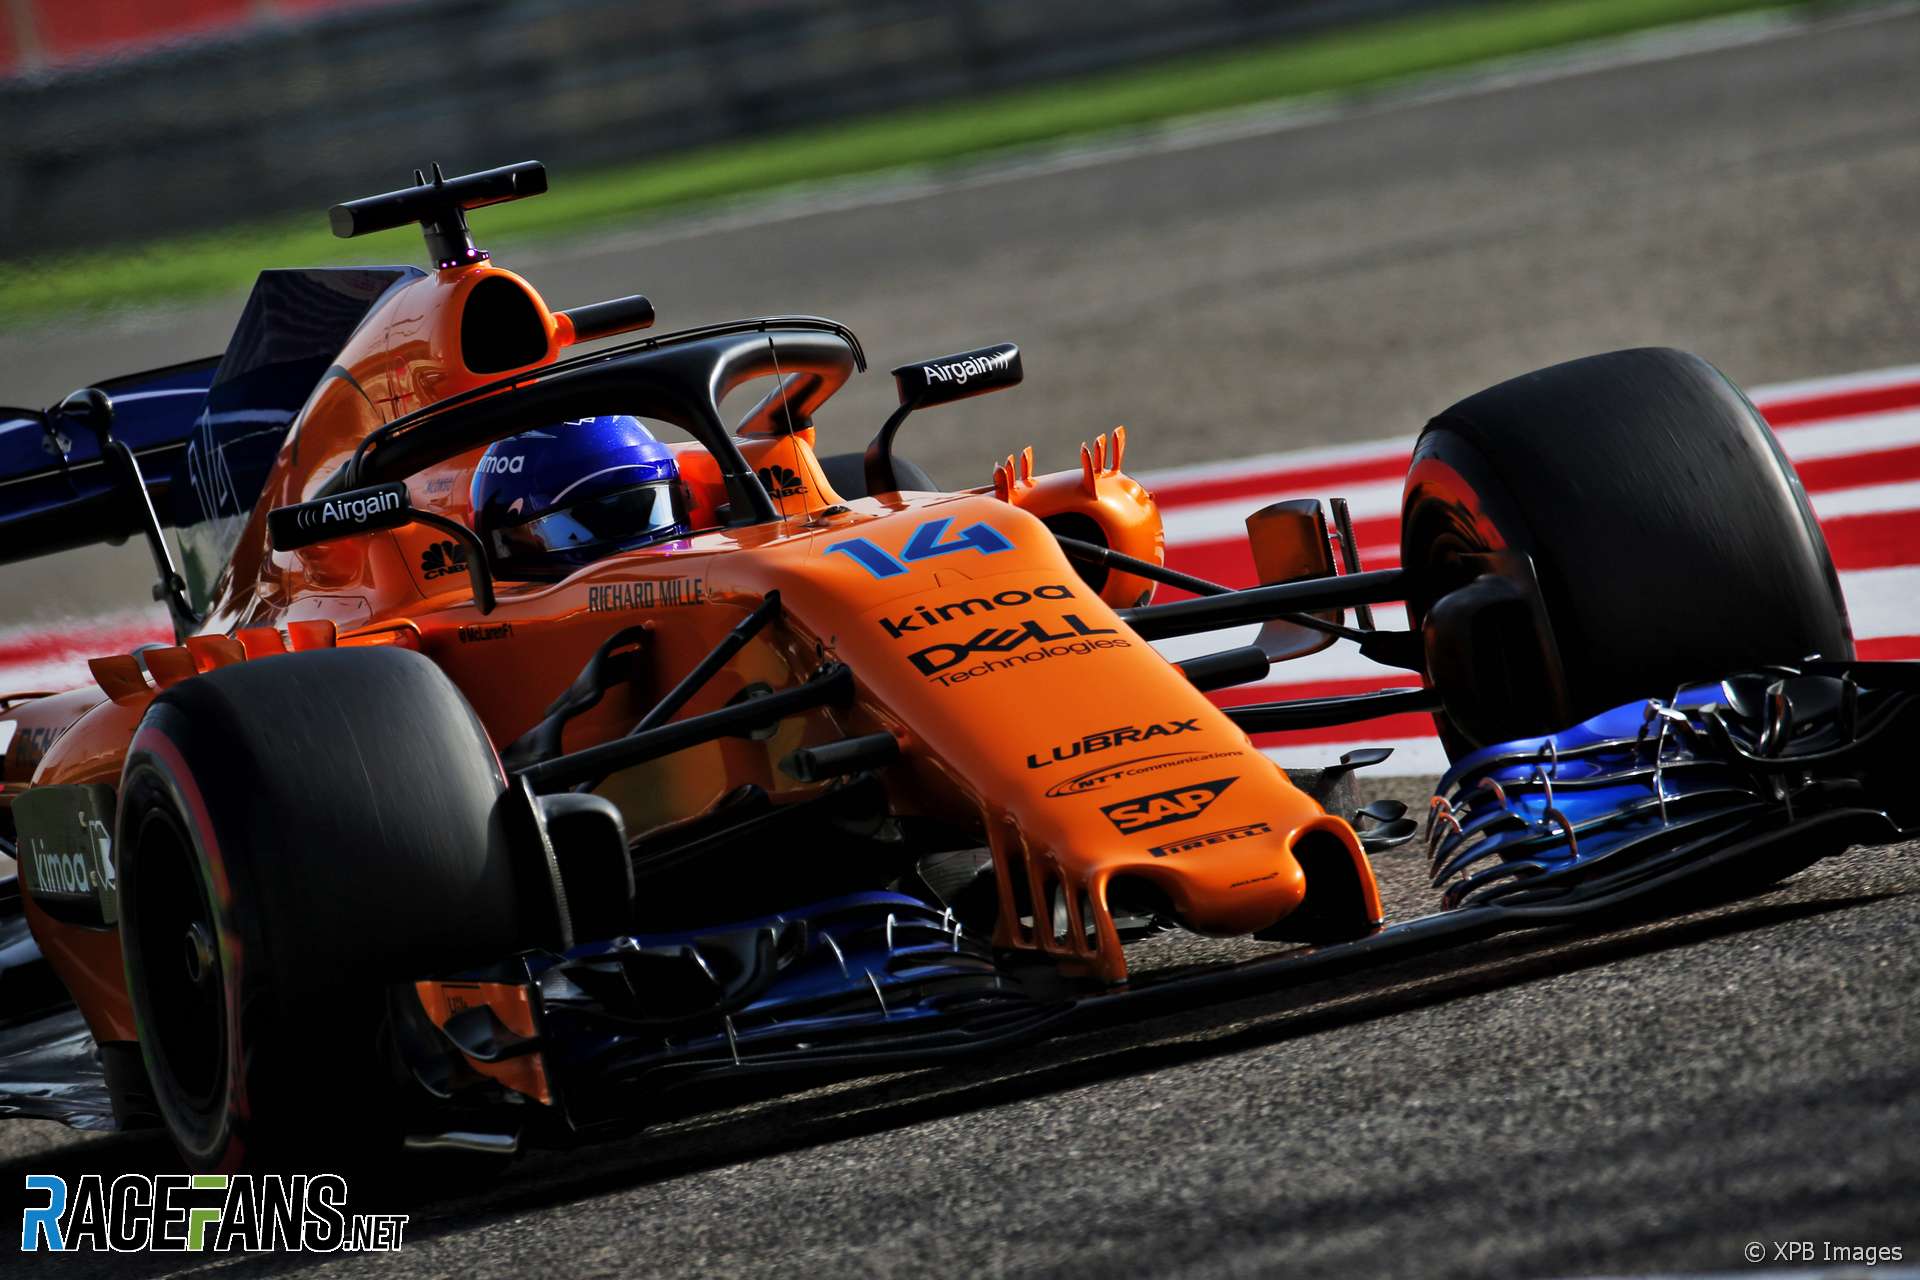 Fernando Alonso, McLaren, Bahrain International Circuit, 2018